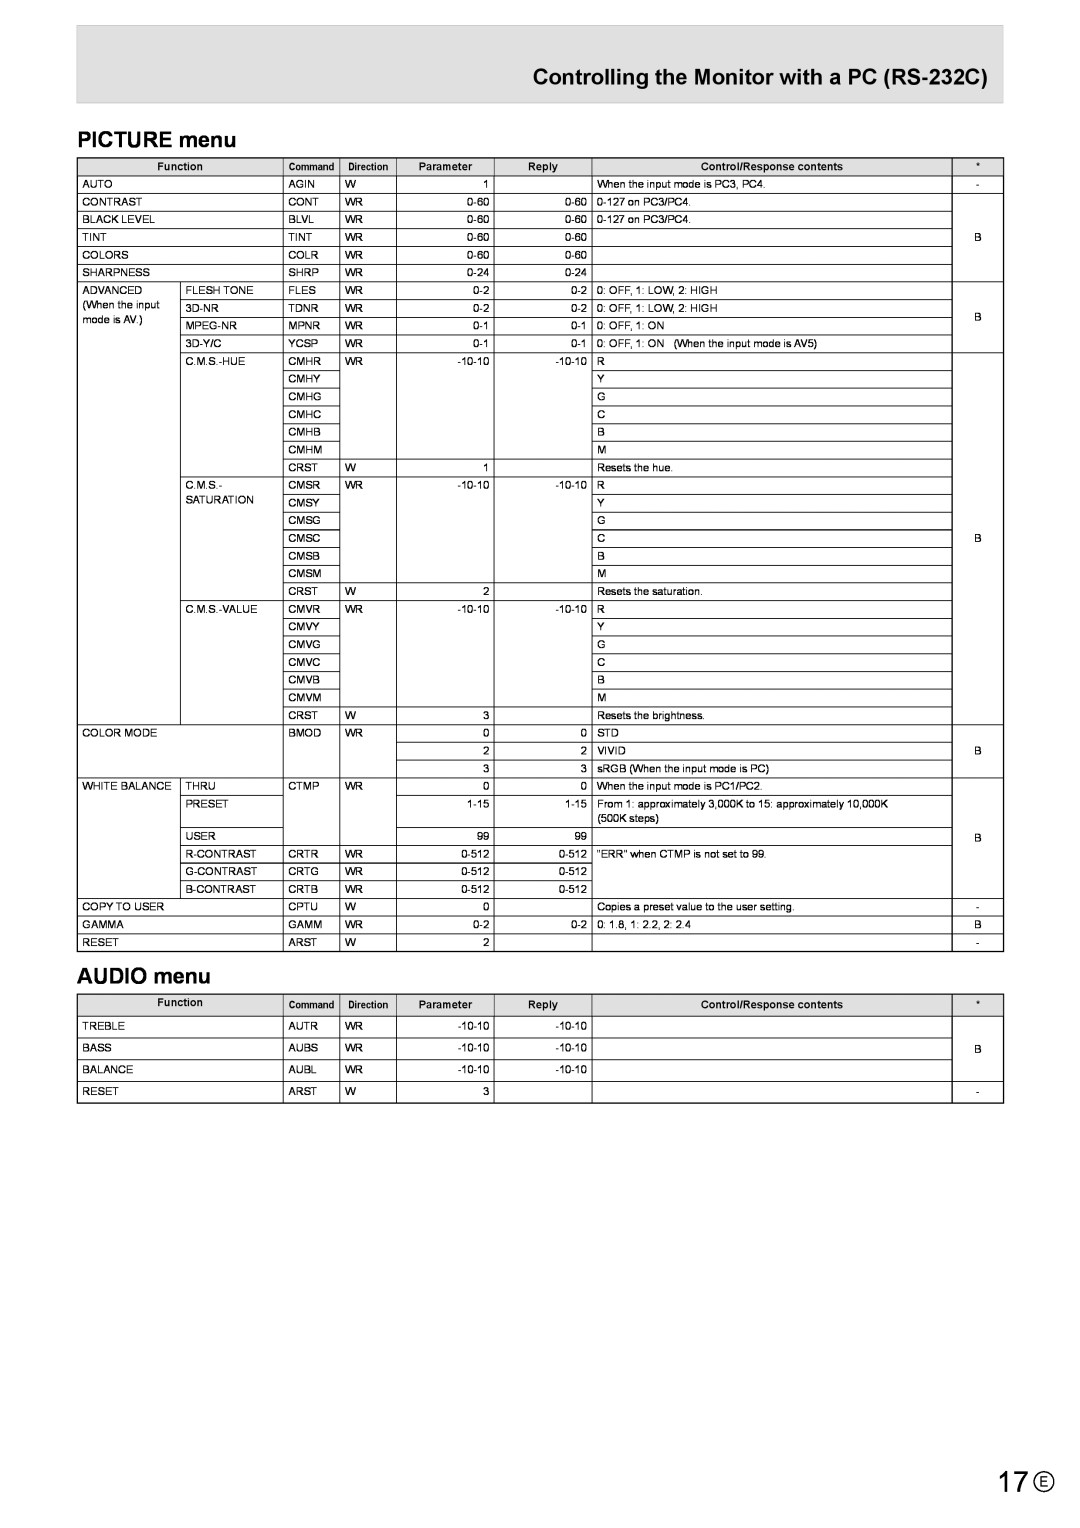 Mitsubishi Electronics LDT521V, MT819 manual 17 E, Controlling the Monitor with a PC RS-232C PICTURE menu, AUDIO menu 